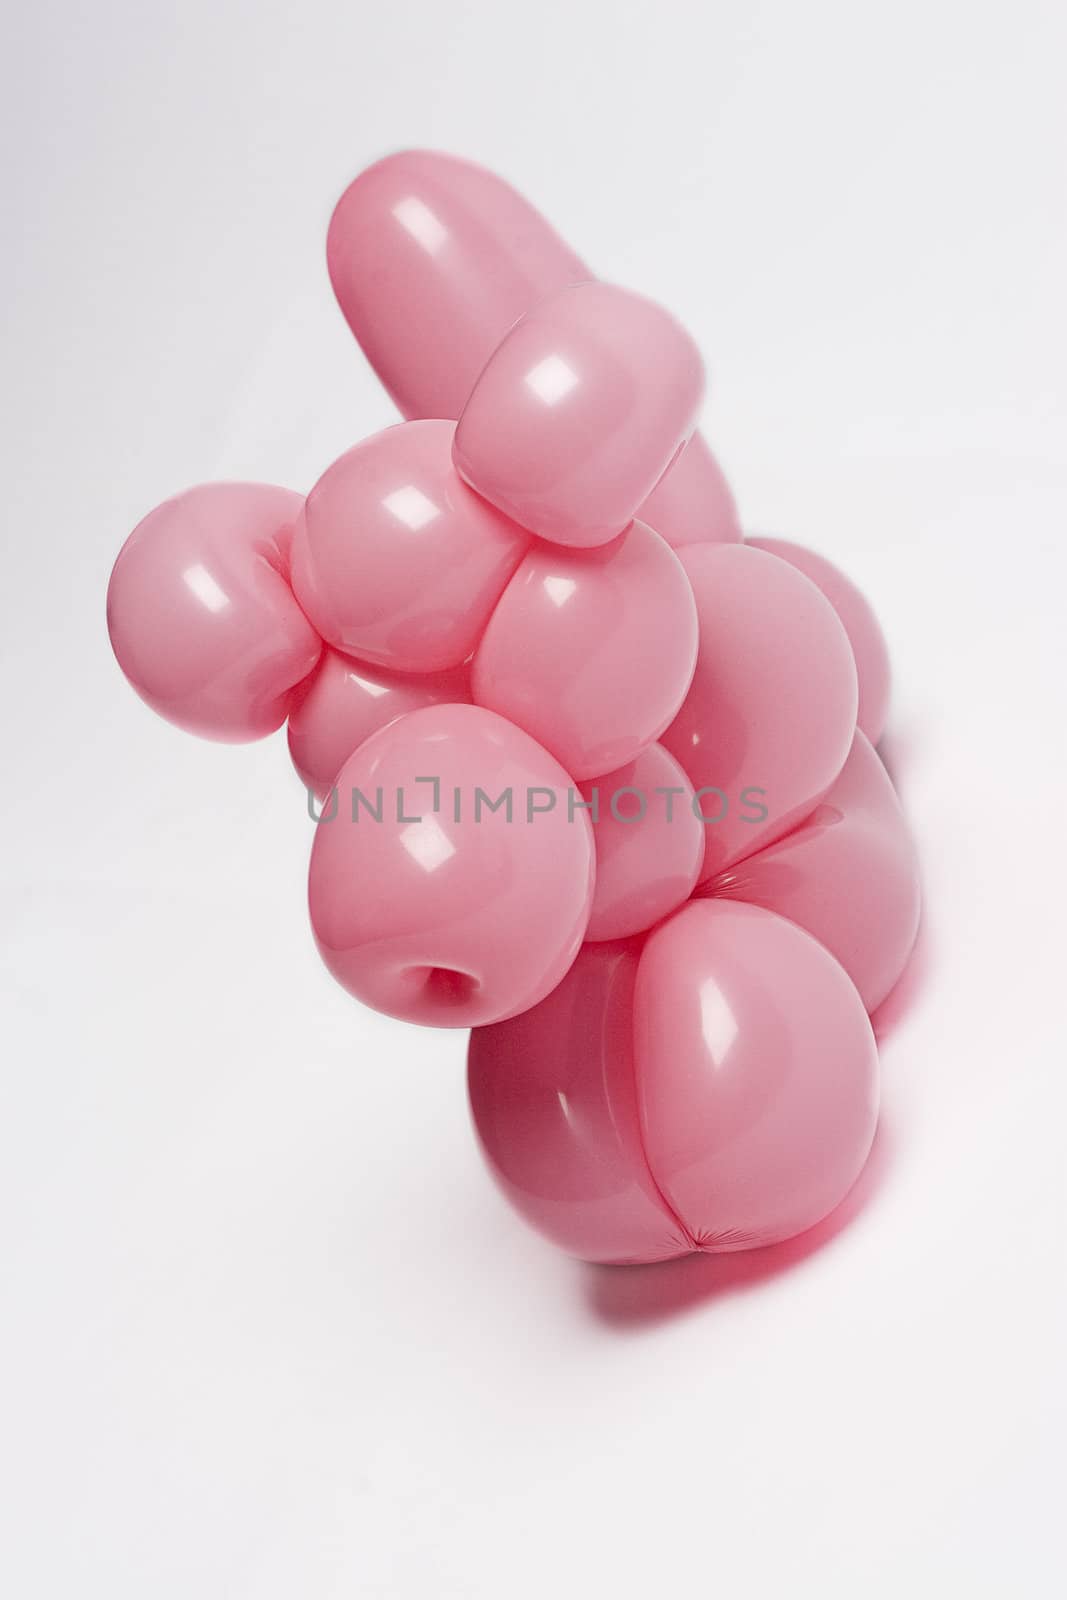 close up of a pink balloon pig